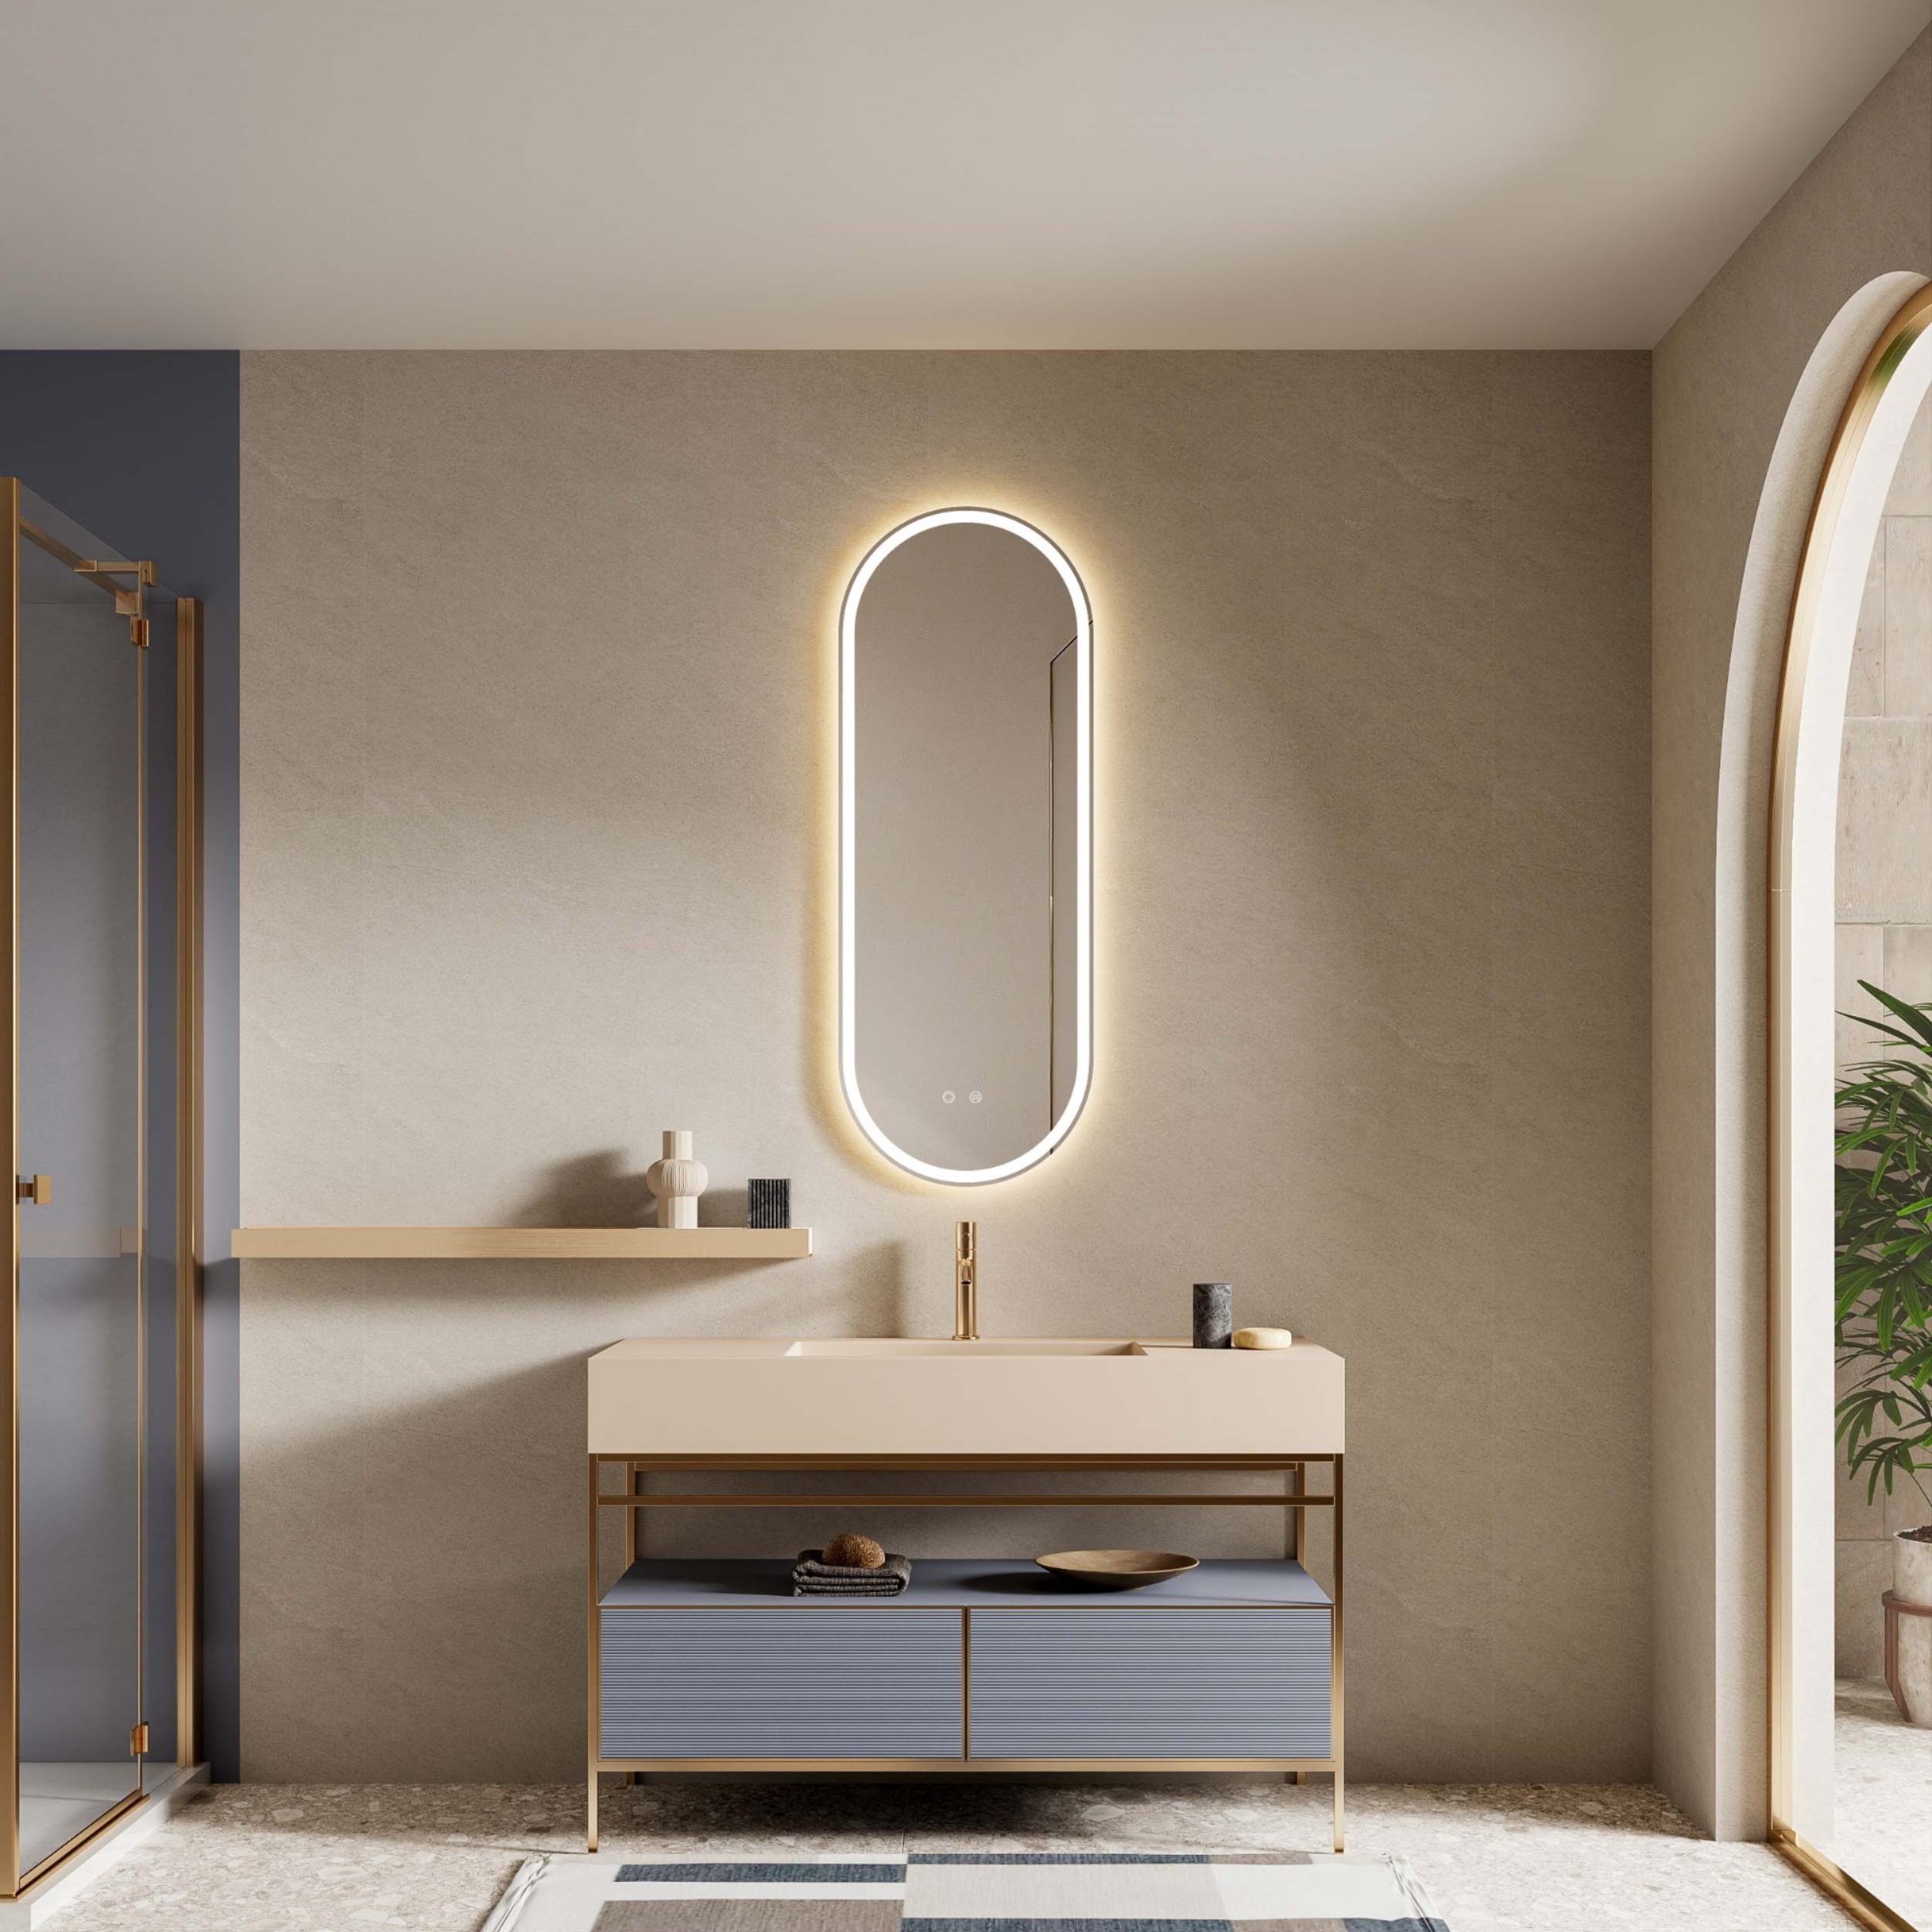 Sydney's Prestigious Residence - Dapai Mirror's LED Oval Bathroom Mirrors Shine Bright